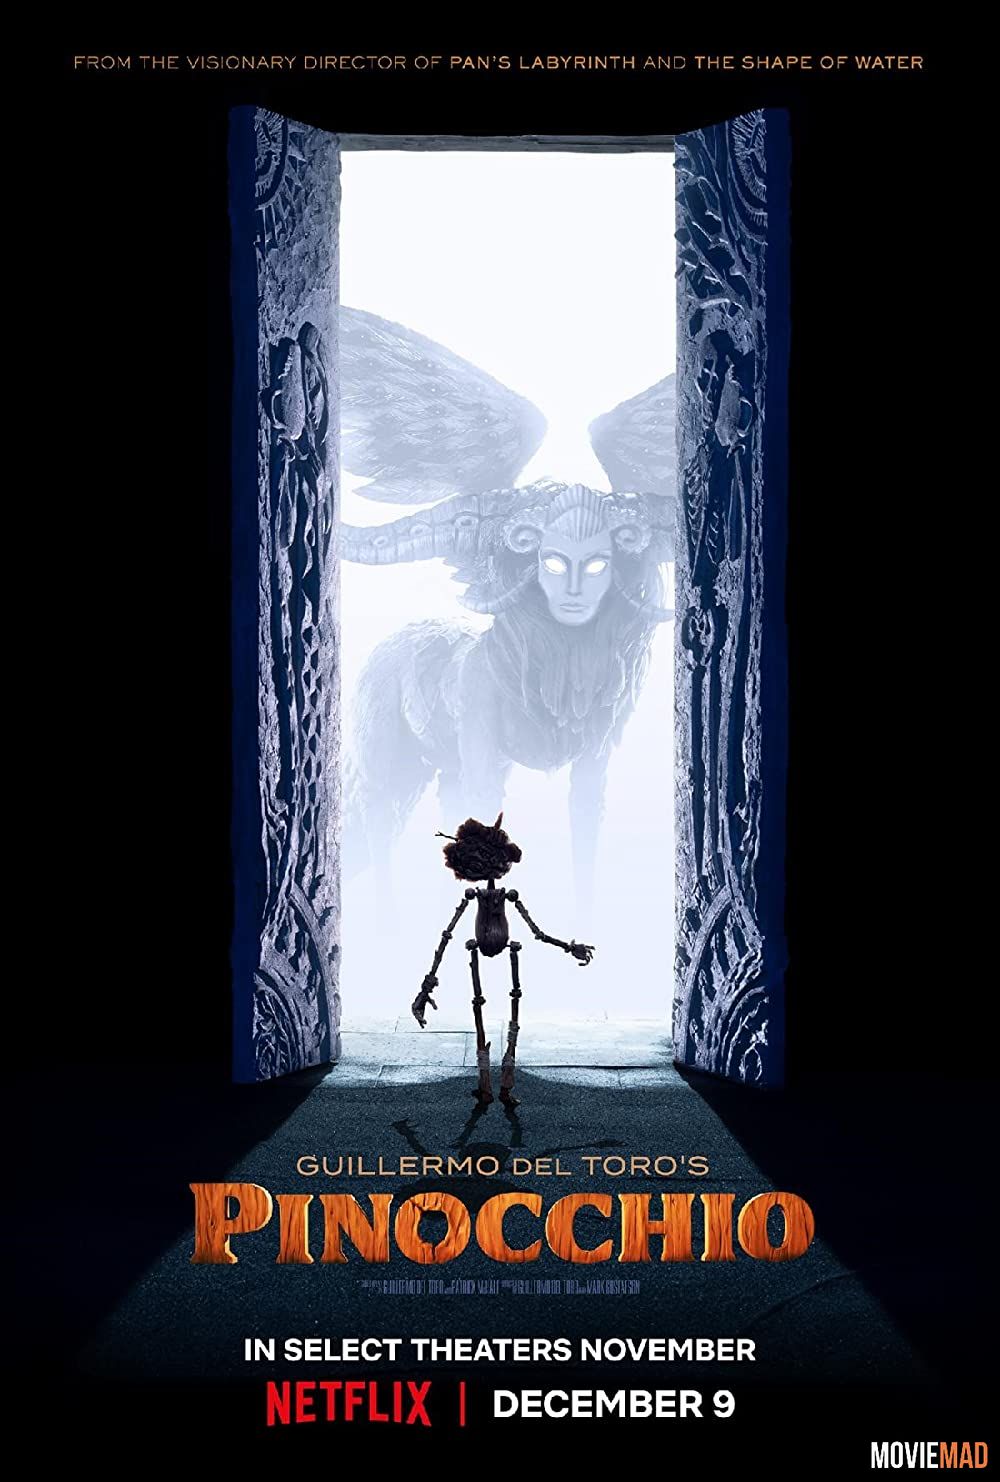 Guillermo del Toros Pinocchio (2022) English NF HDRip Full Movie 720p 480p